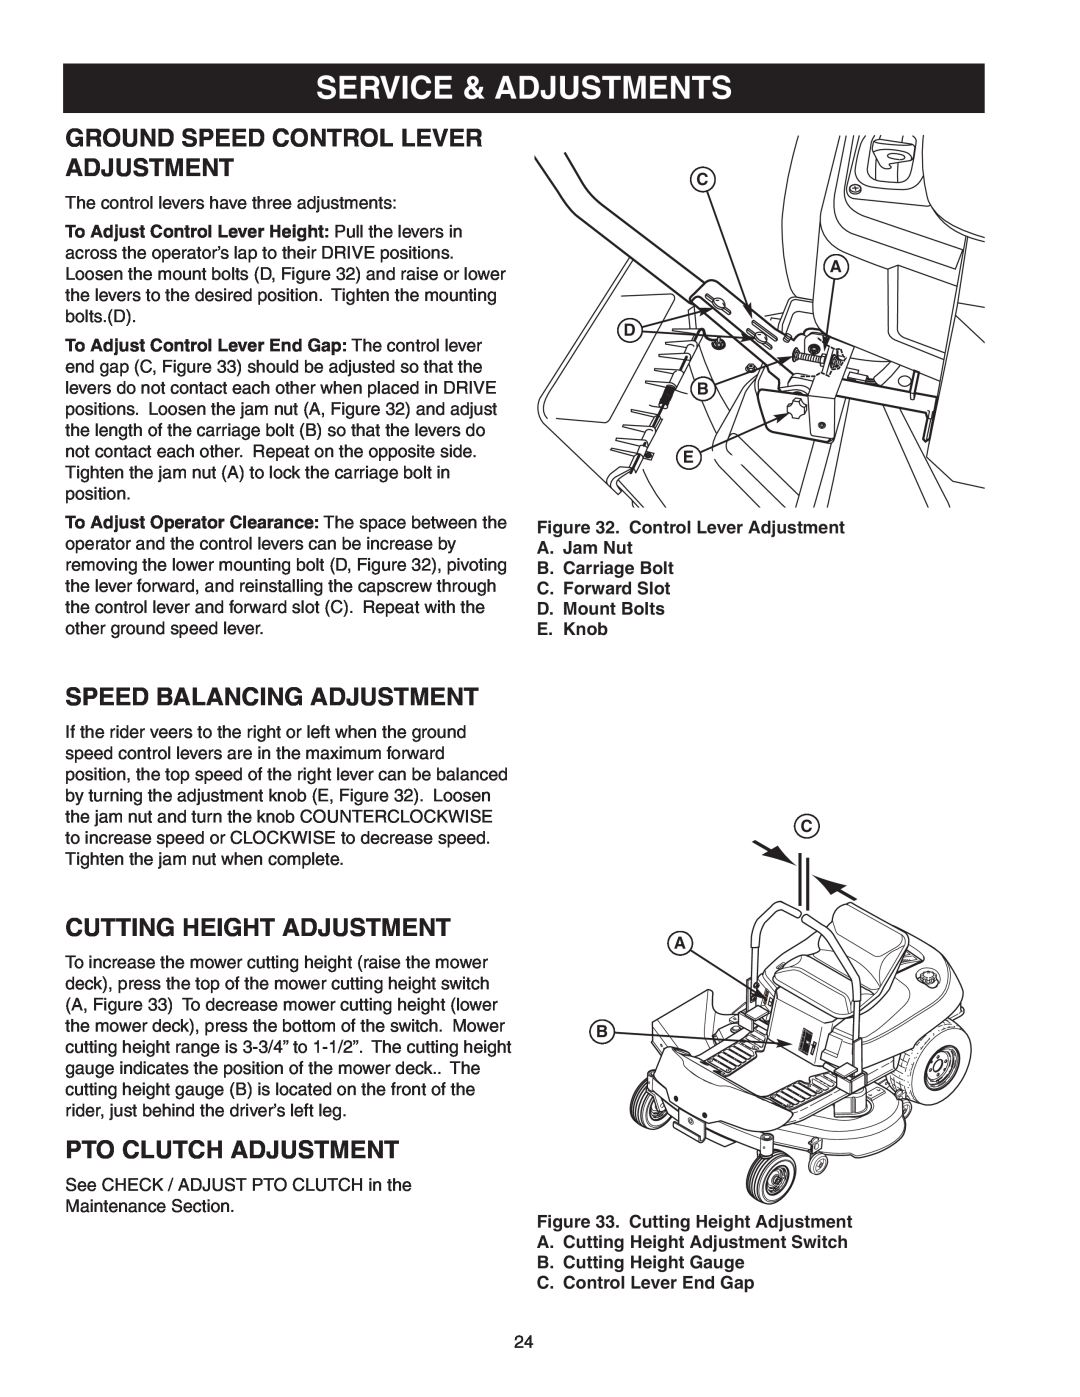 Snapper 150Z ZTR Series manual Service & Adjustments, Ground Speed Control Lever Adjustment, Speed Balancing Adjustment 